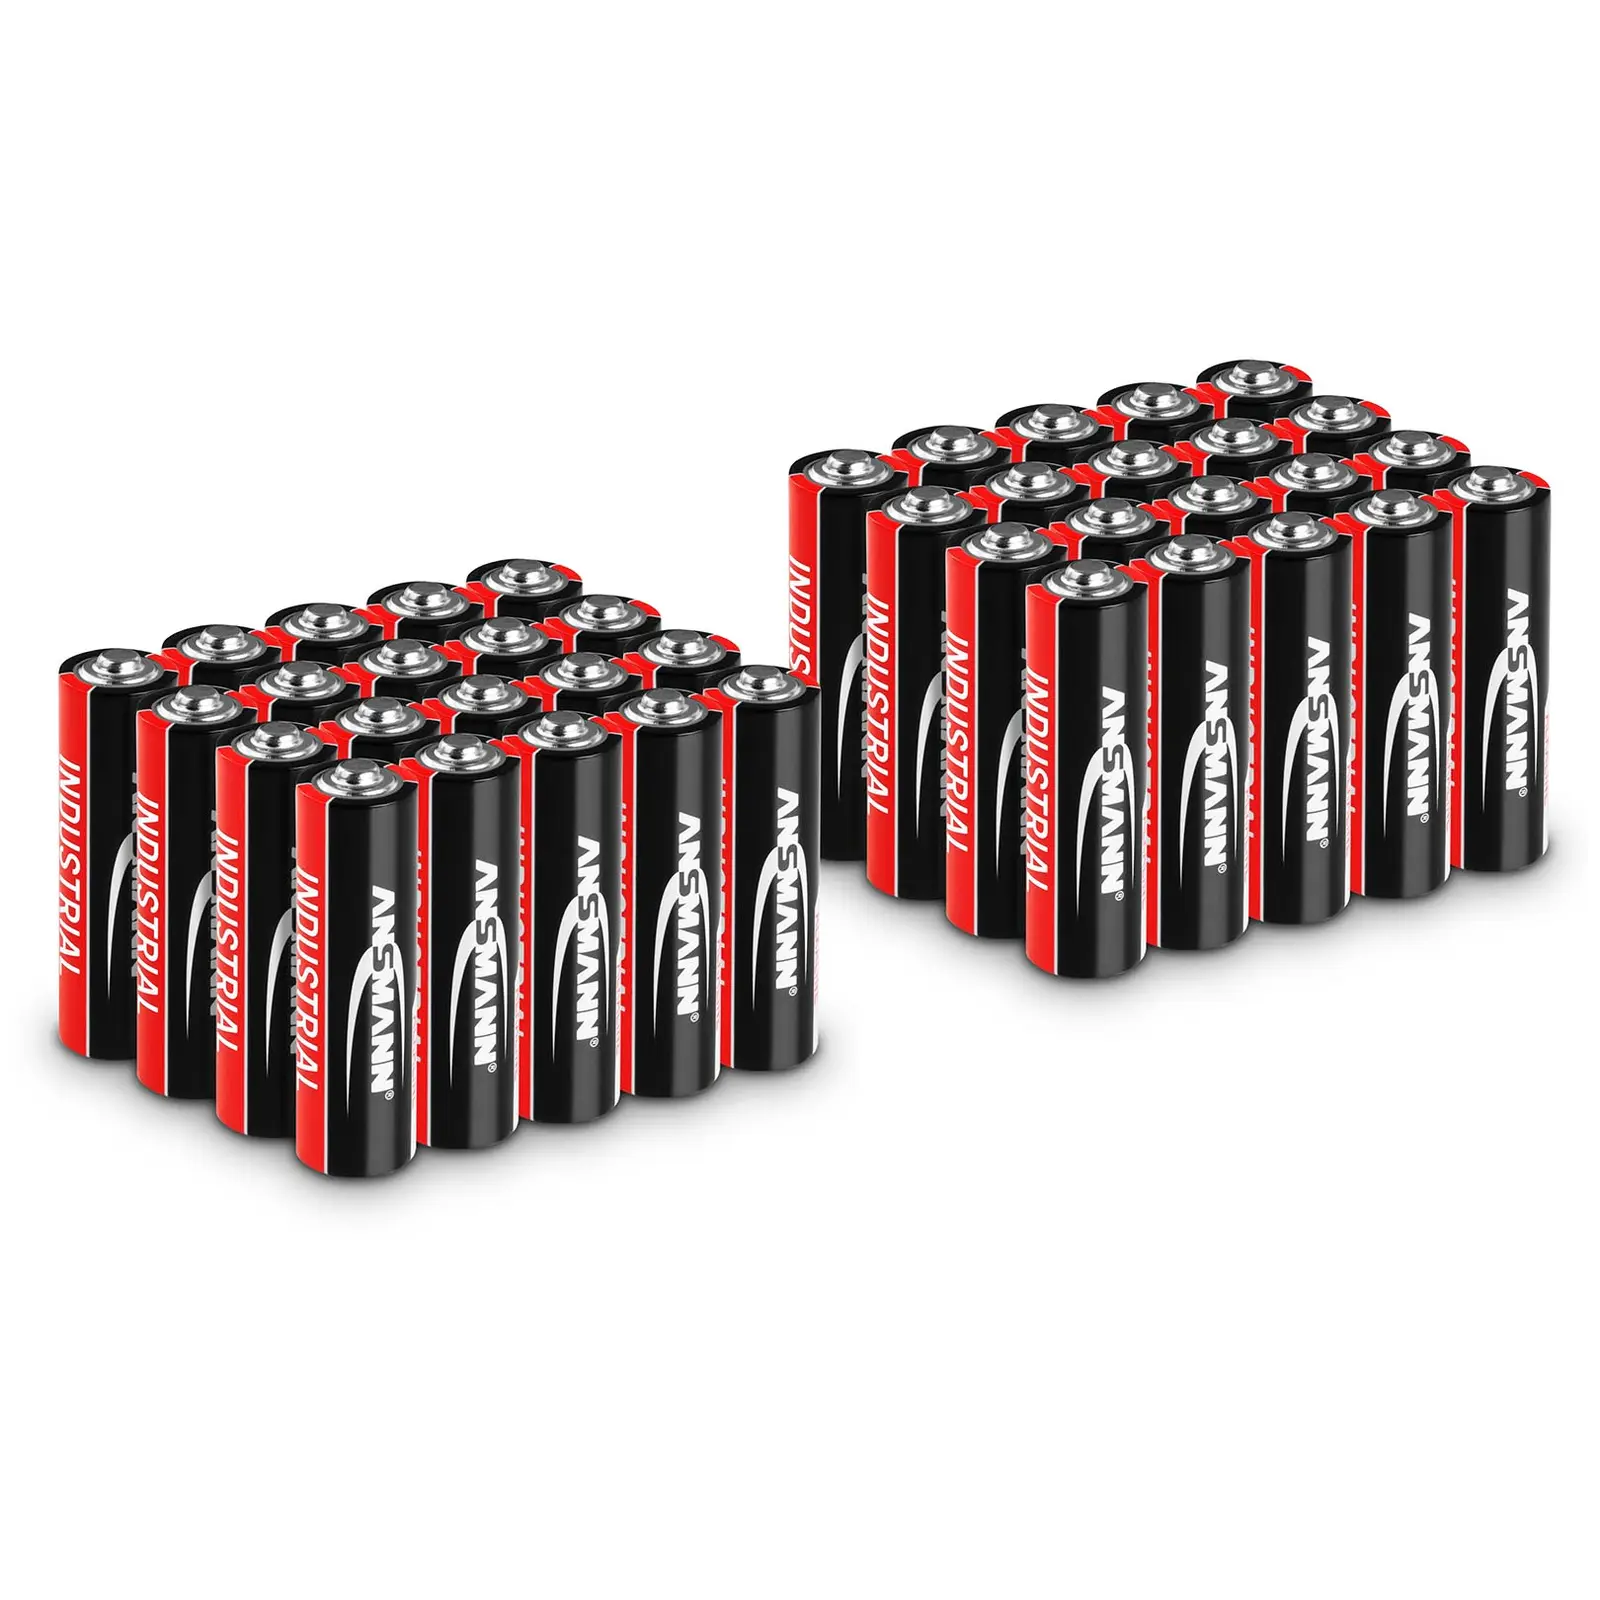 40 x Mignon AA LR6 Batteries - Ansmann INDUSTRIAL Alkaline Batteries - 1.5 V